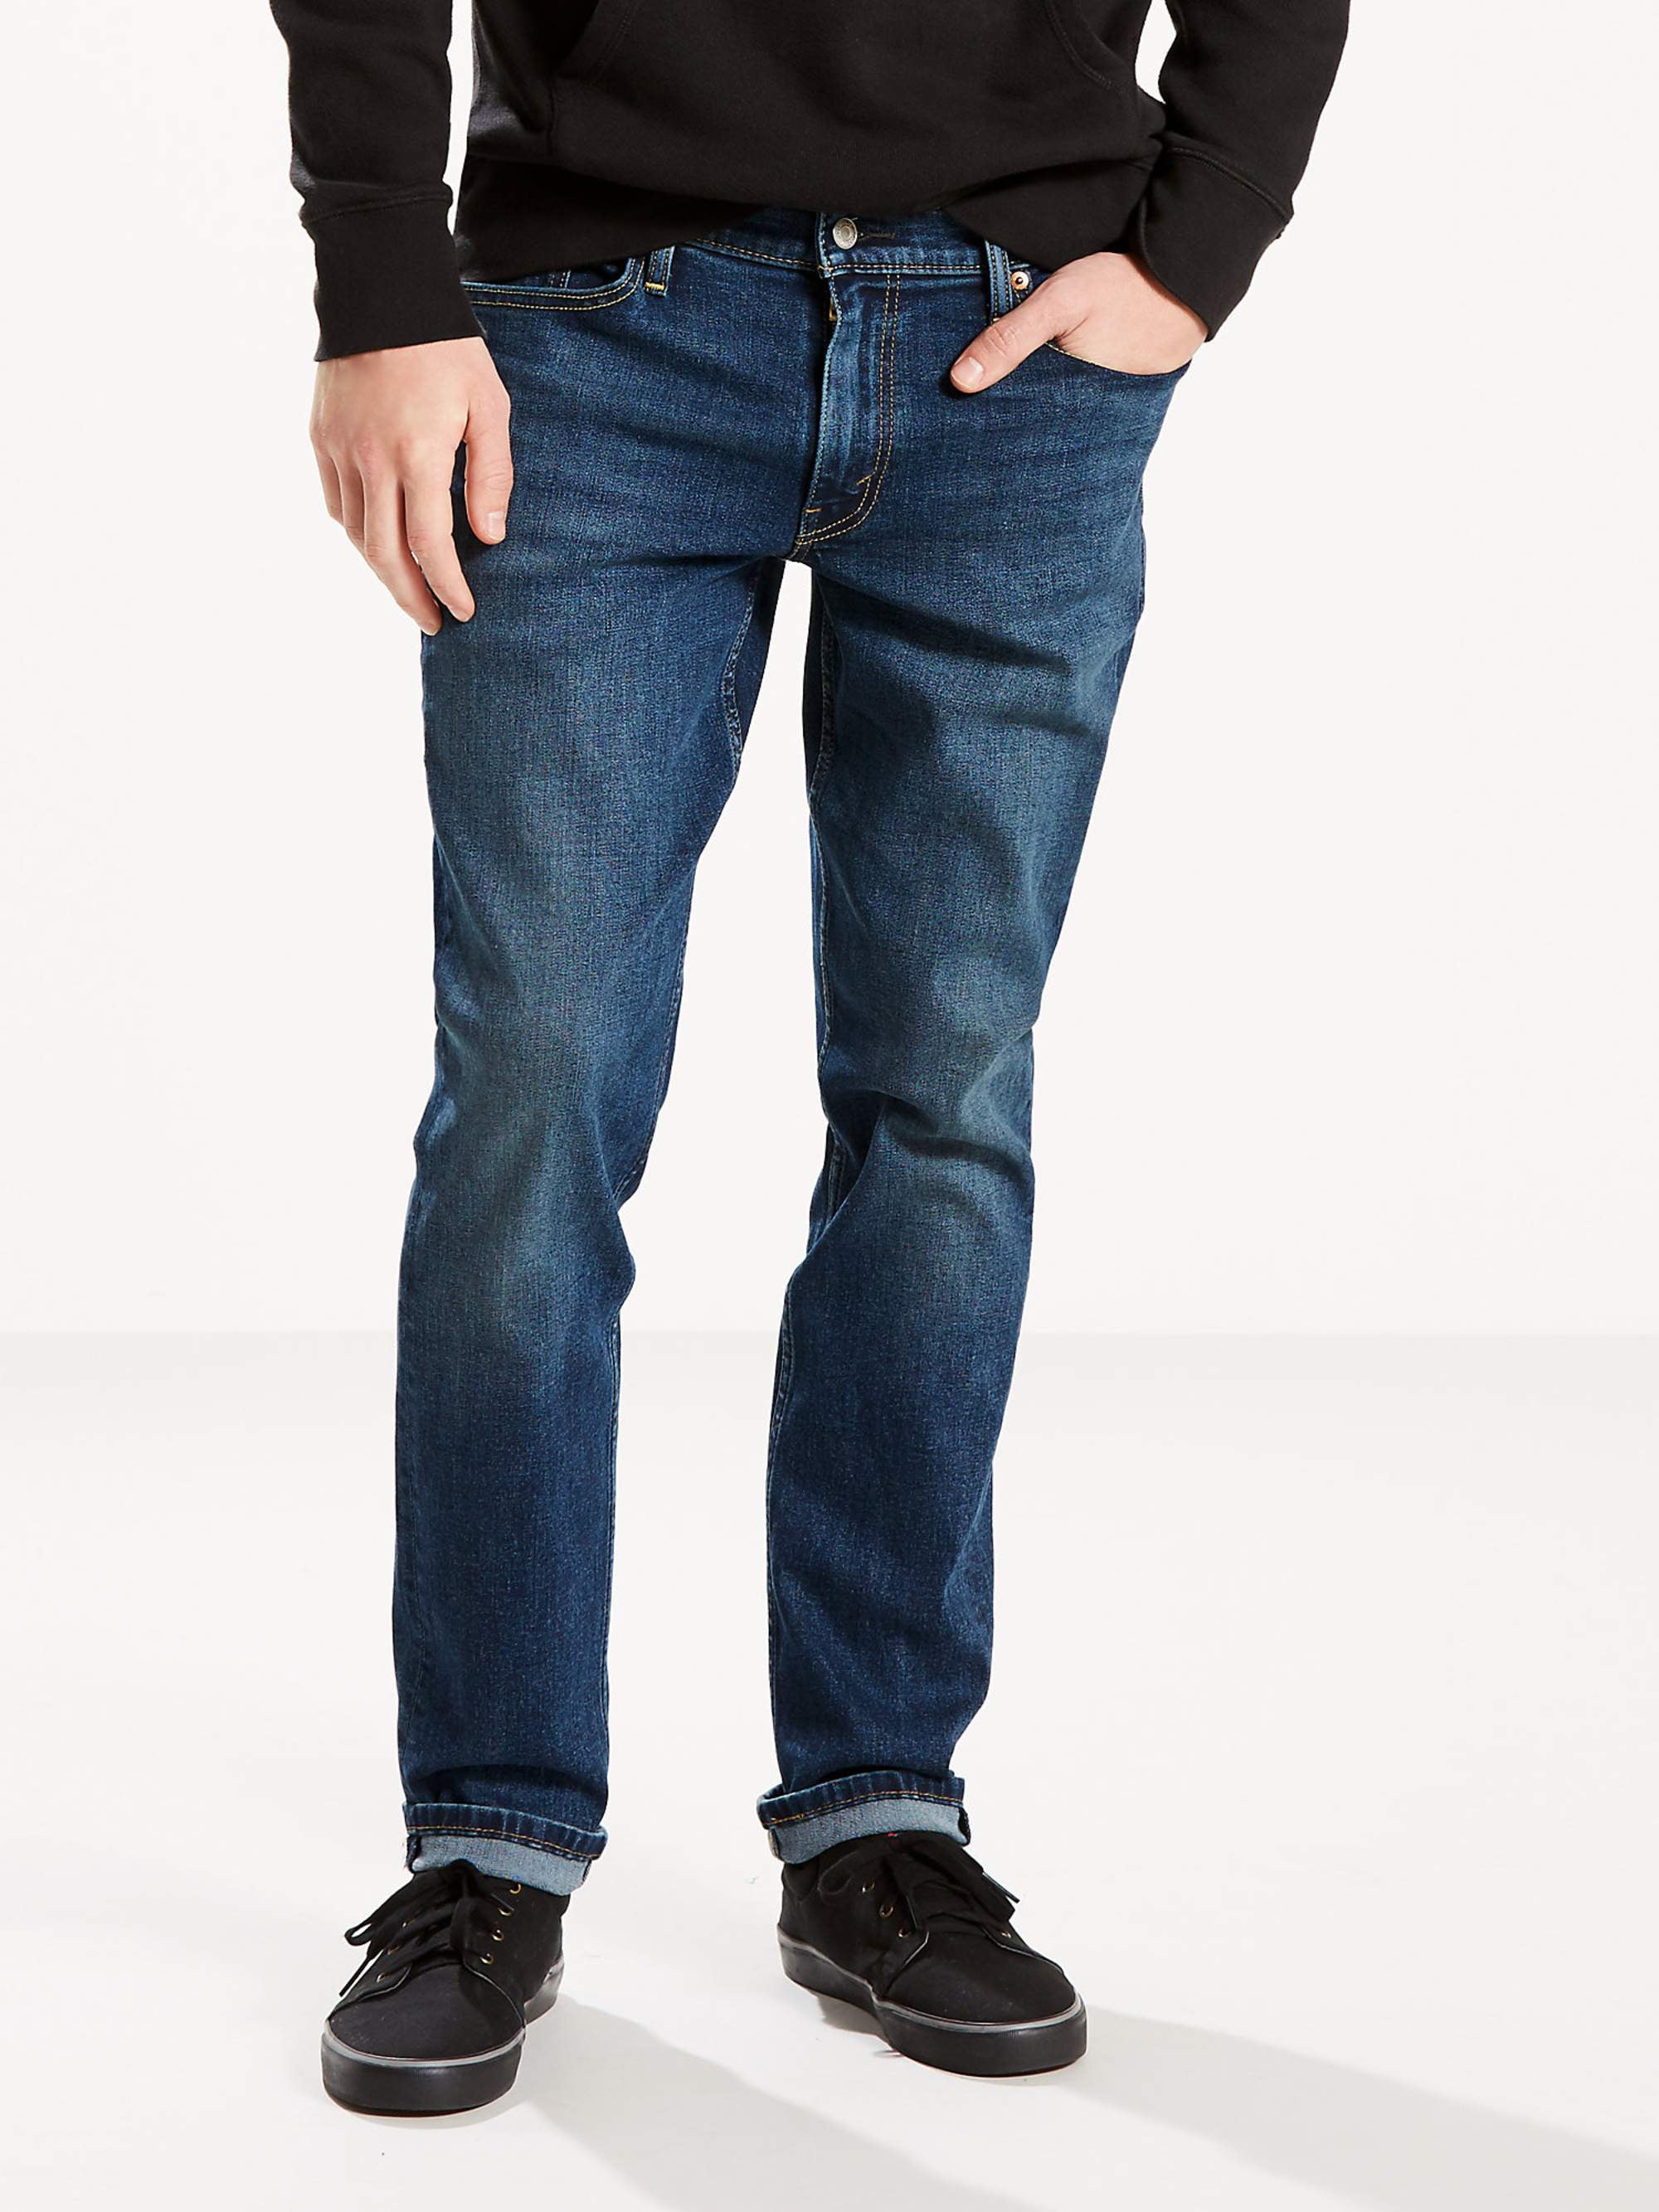 Måne Evne ideologi Levi's Men's 511 Slim Fit Jeans - Walmart.com